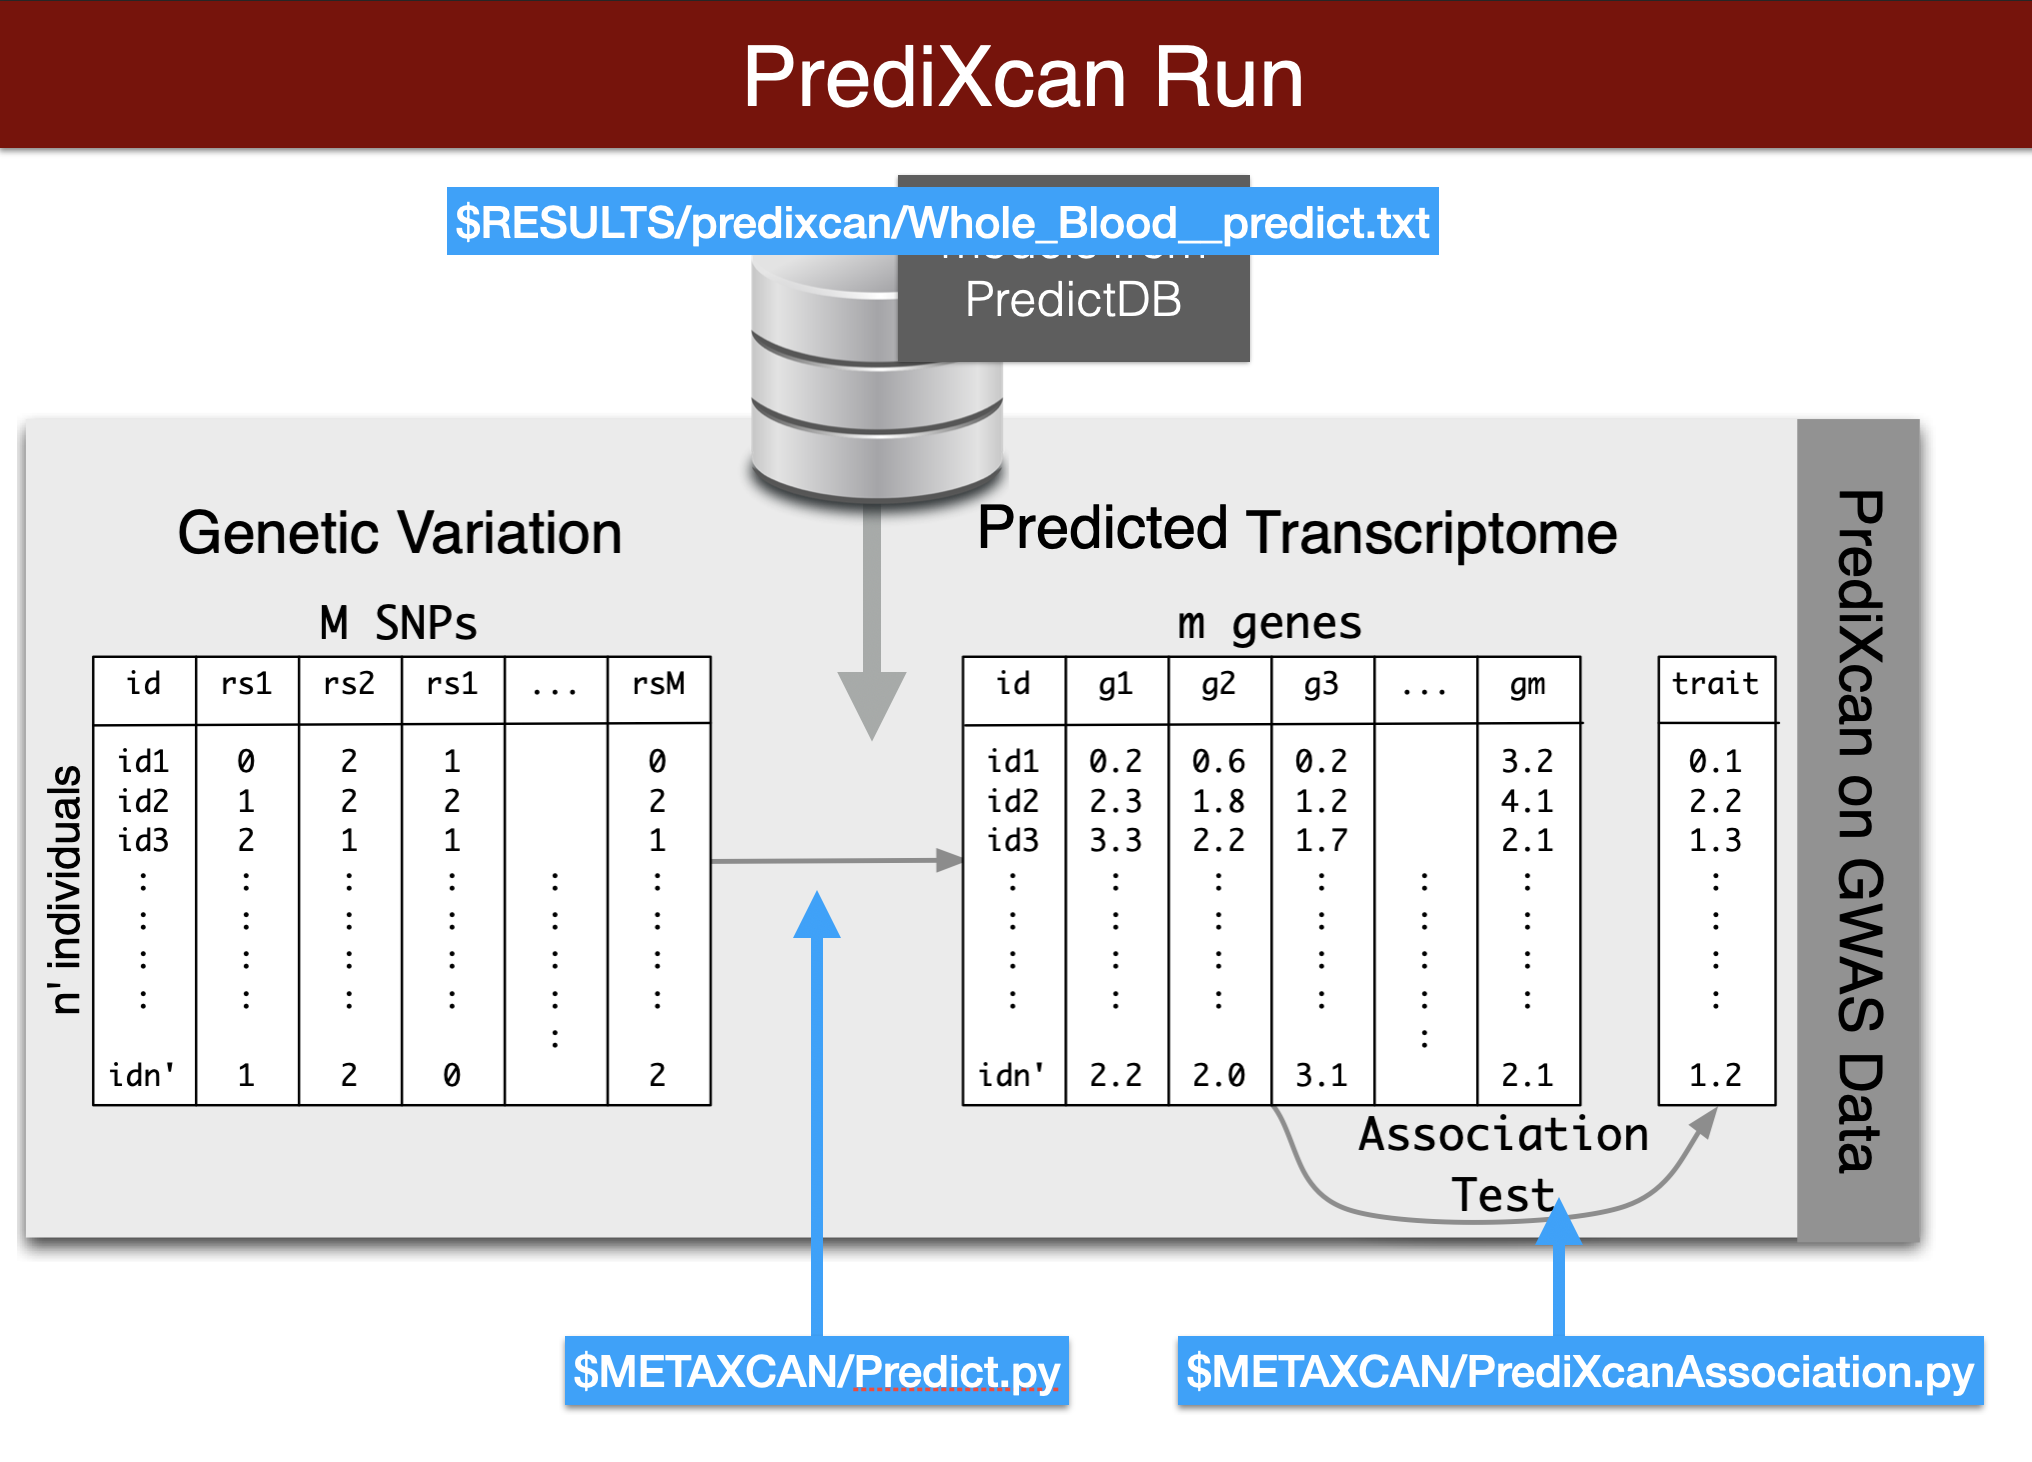 Visual summary of predixcan runs